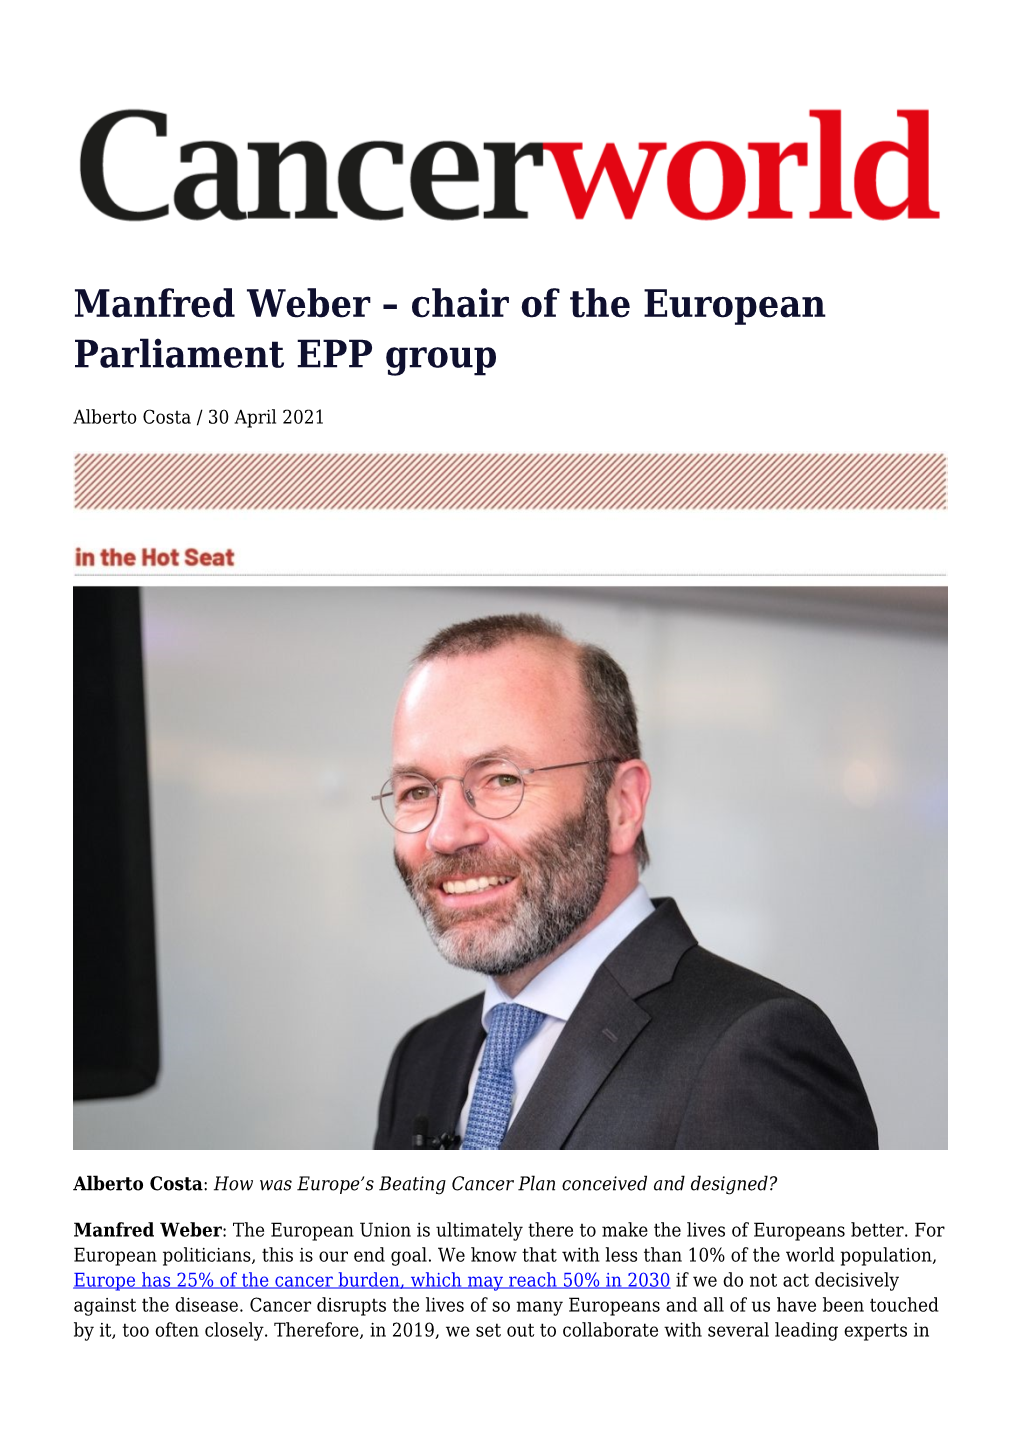 Manfred Weber – Chair of the European Parliament EPP Group